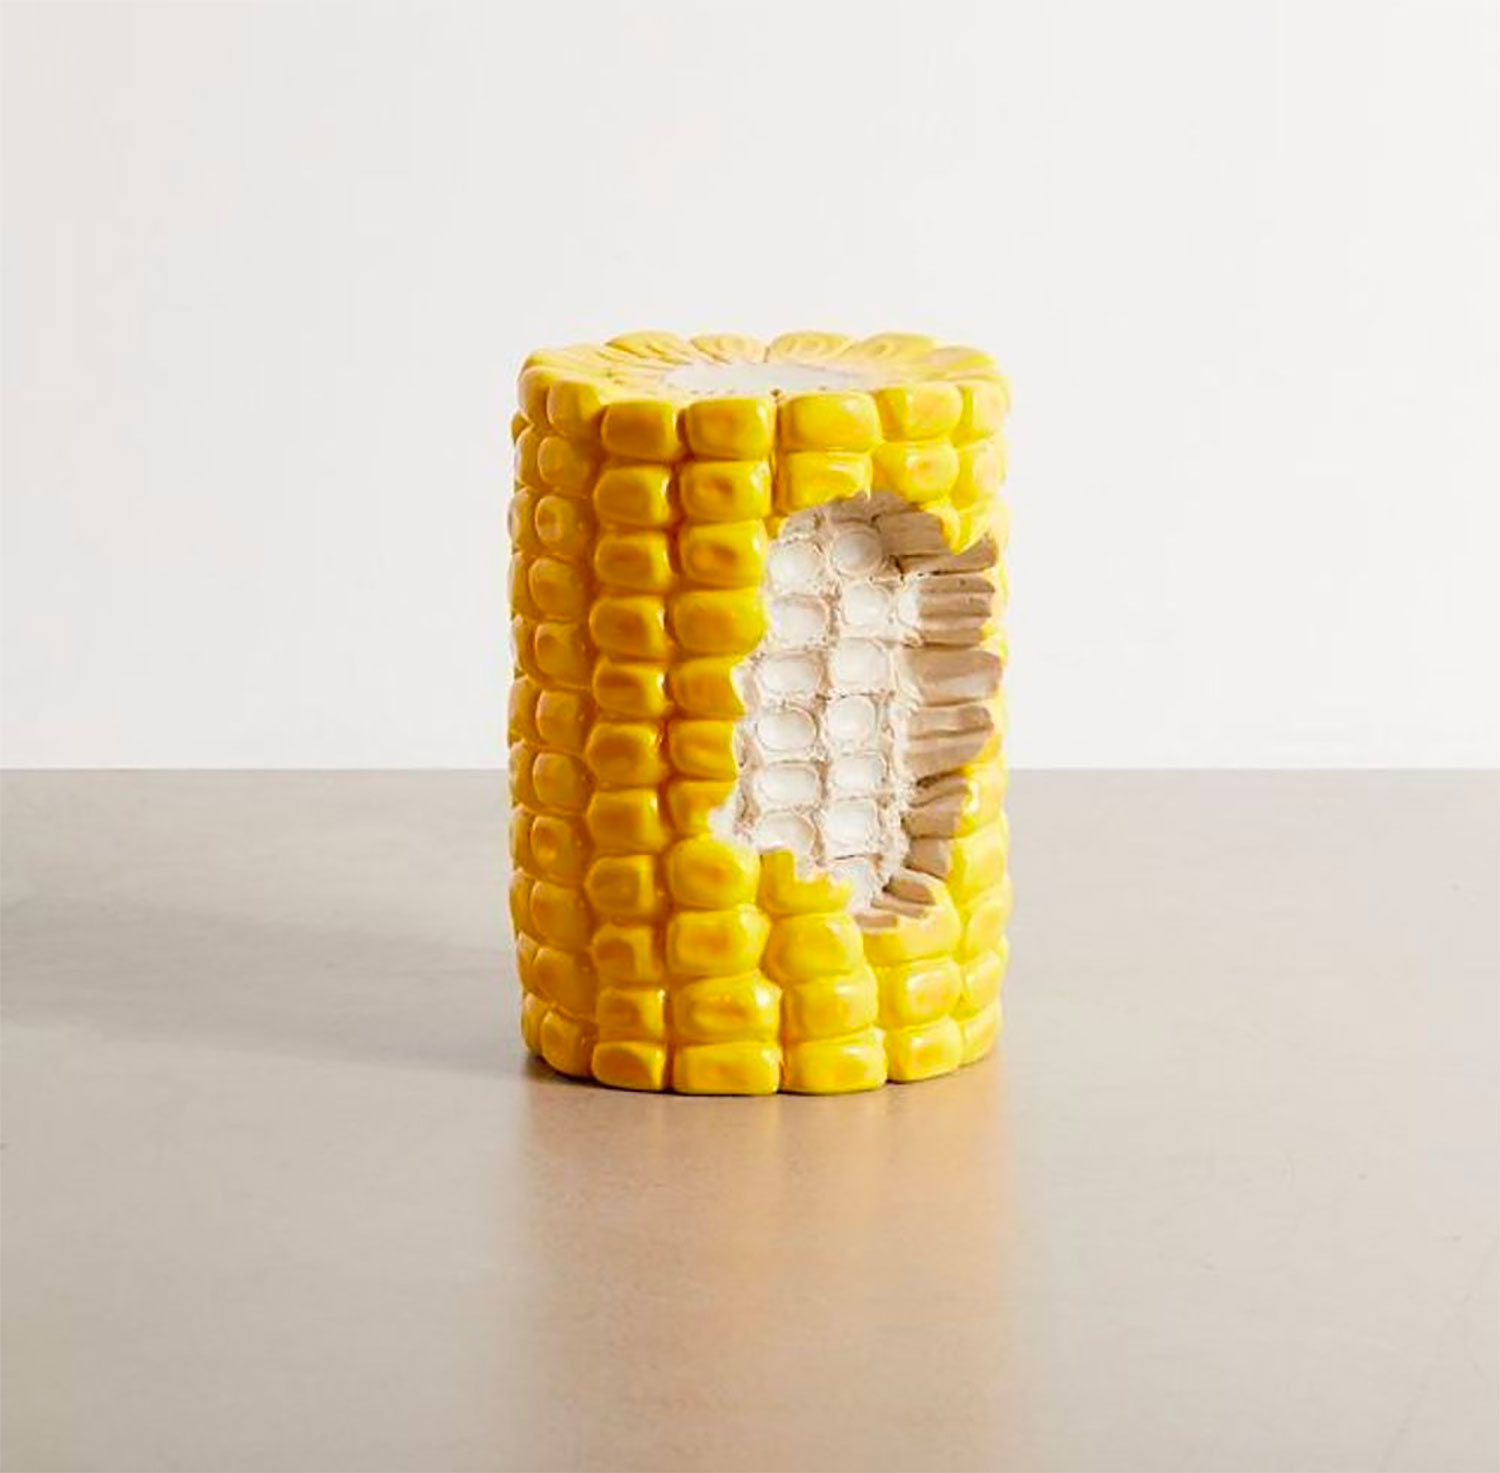 Half eaten realistic corn cob stool on a grey surface